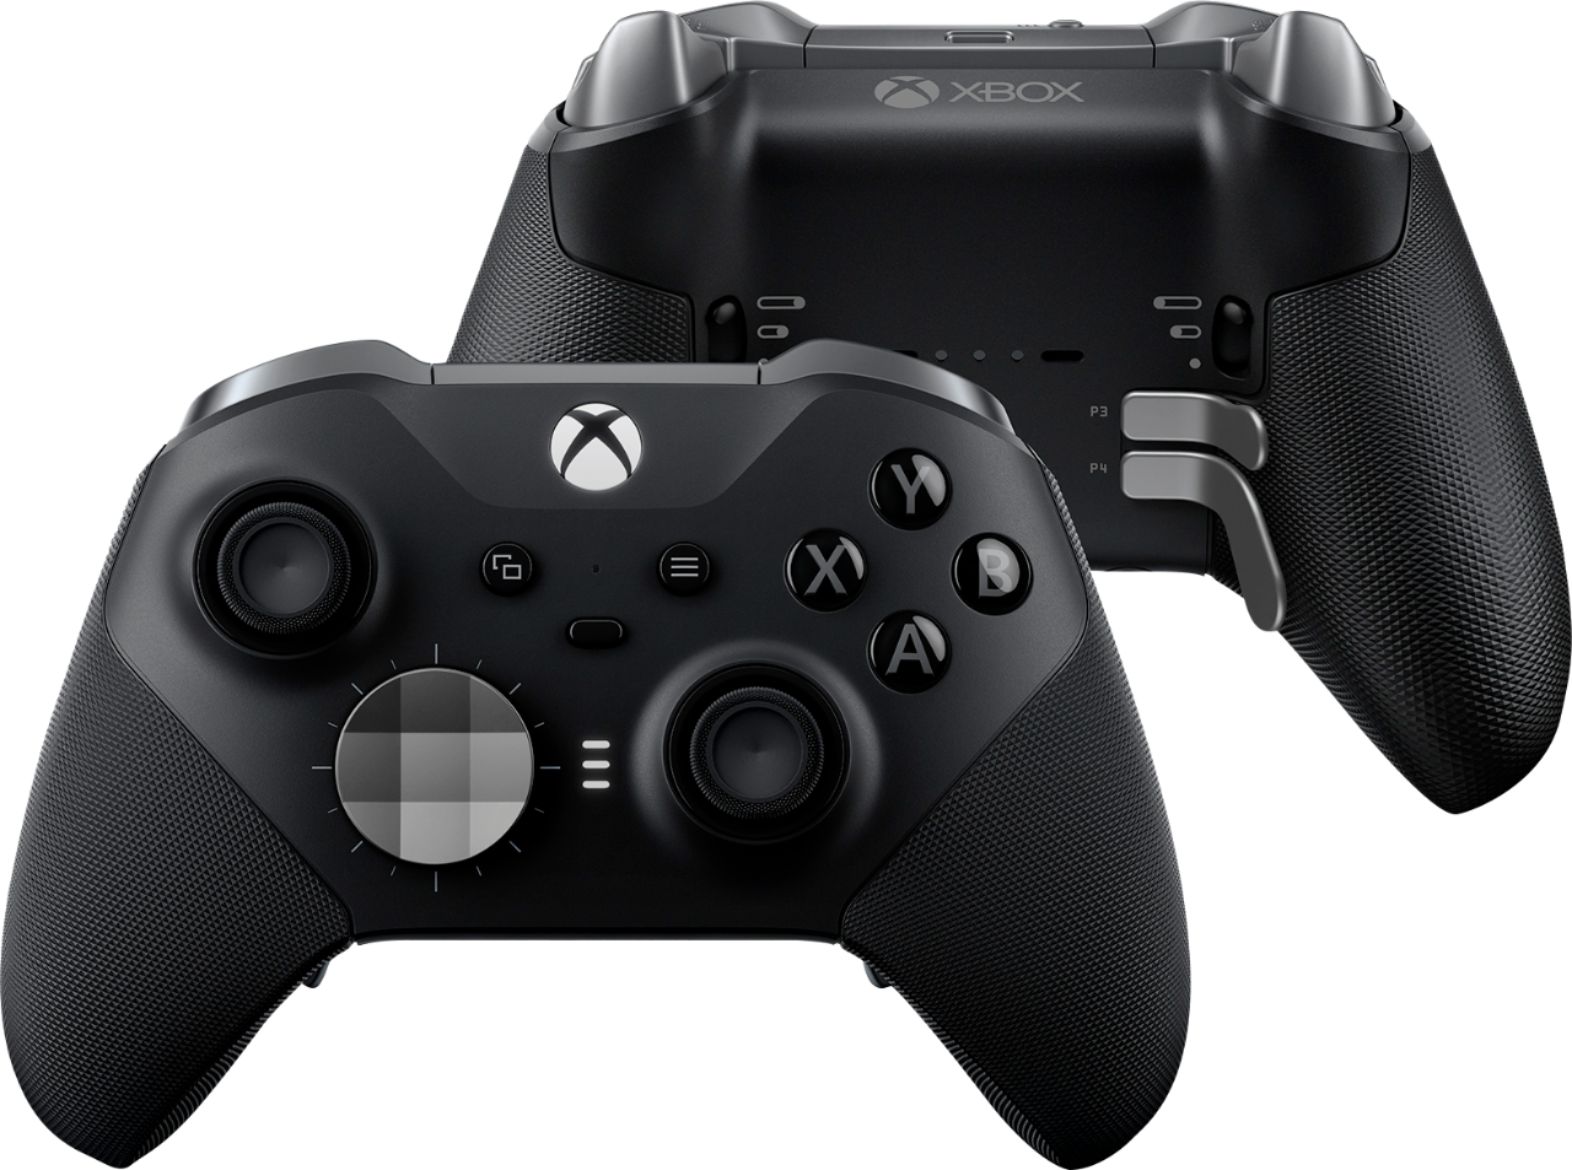 Microsoft Elite Series 2 Wireless Controller for Xbox One, Xbox 